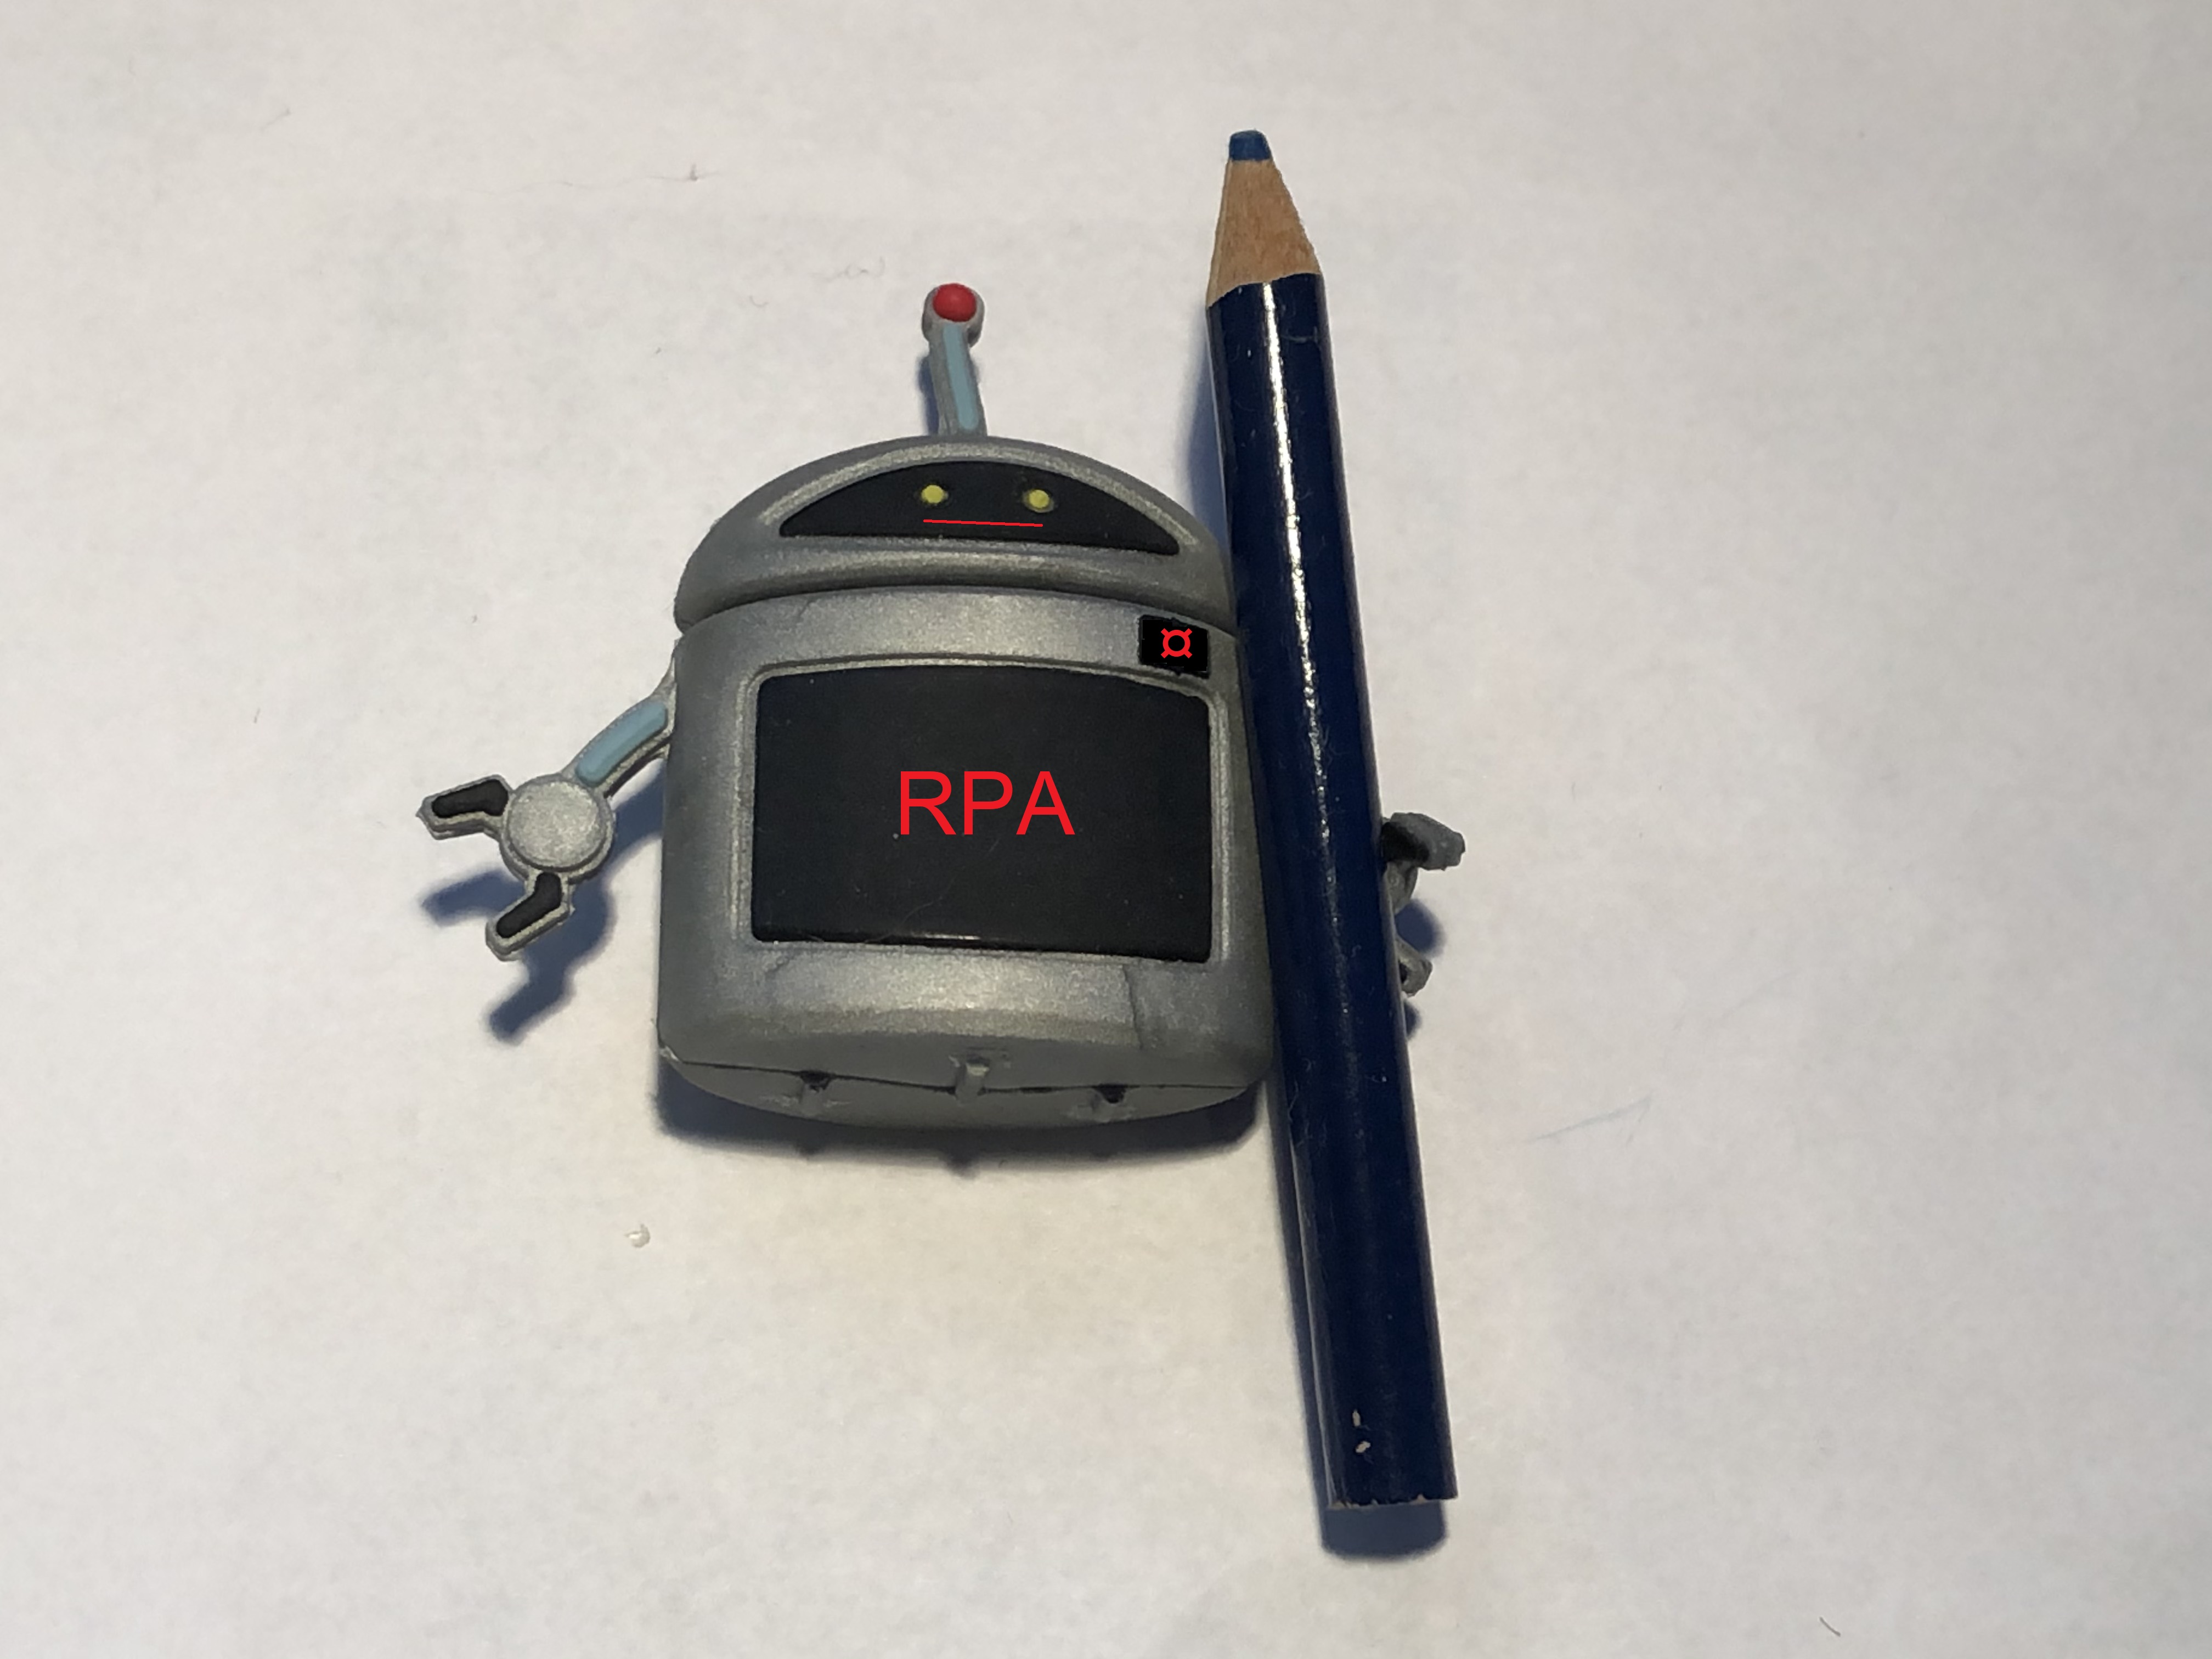 RPA - Kontor Robot